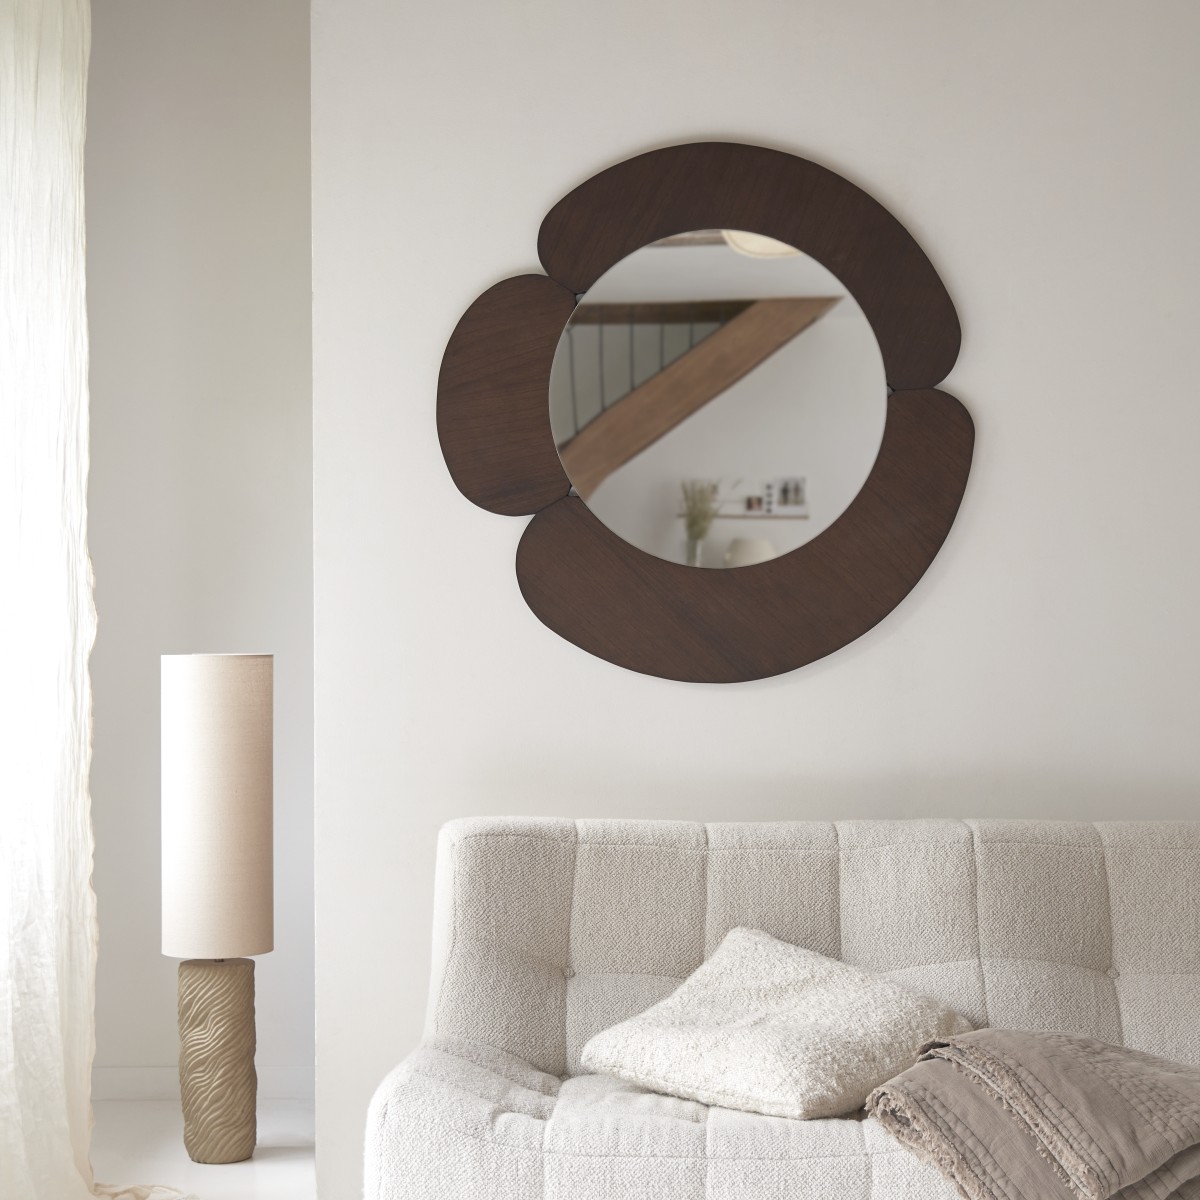 Sara - Spiegel mit dunklem Mindiholz-Rahmen 110 x 110 cm